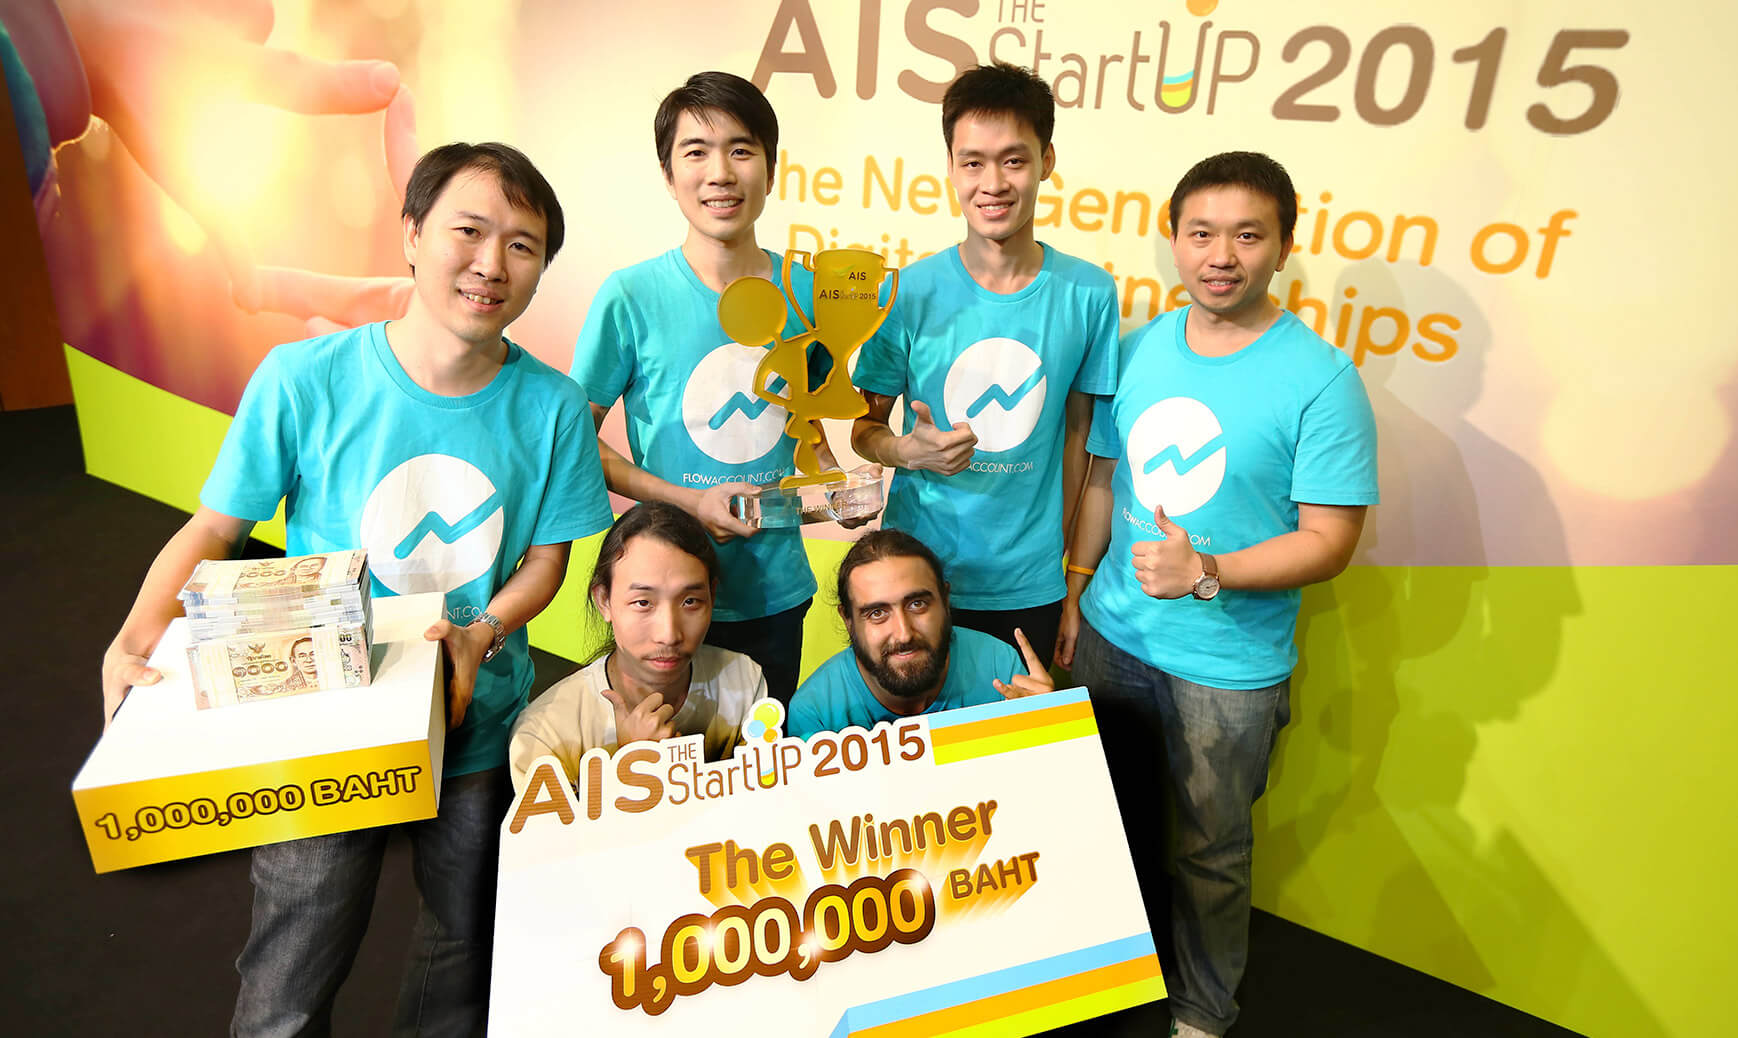 The winner AIS The StartUp